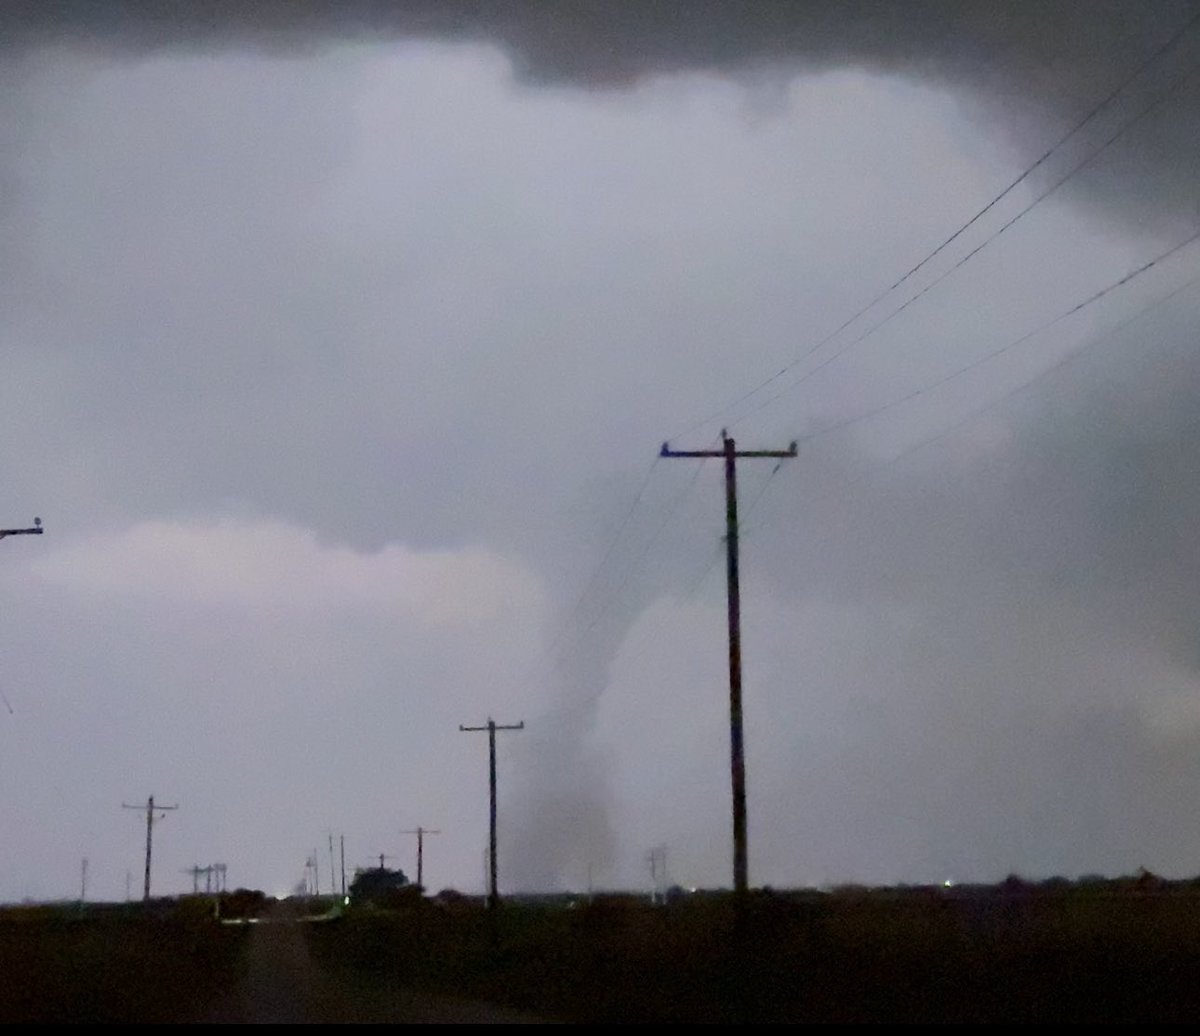 Tornado captured by @JordanHallWX south of Yukon, Oklahoma earlier today. #okwx